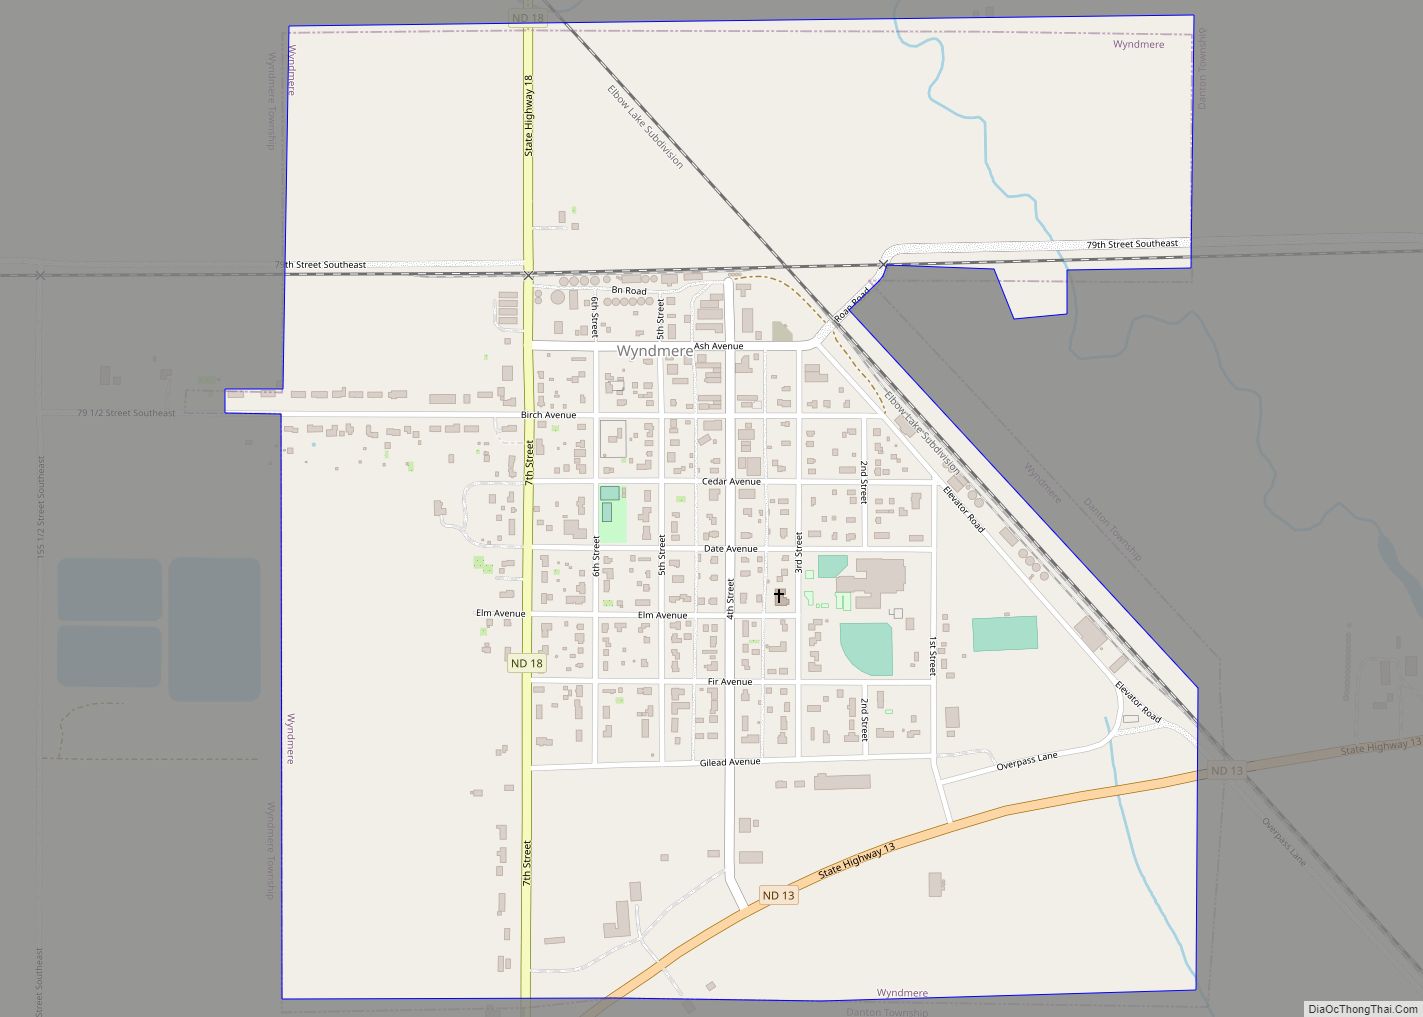 Map of Wyndmere city